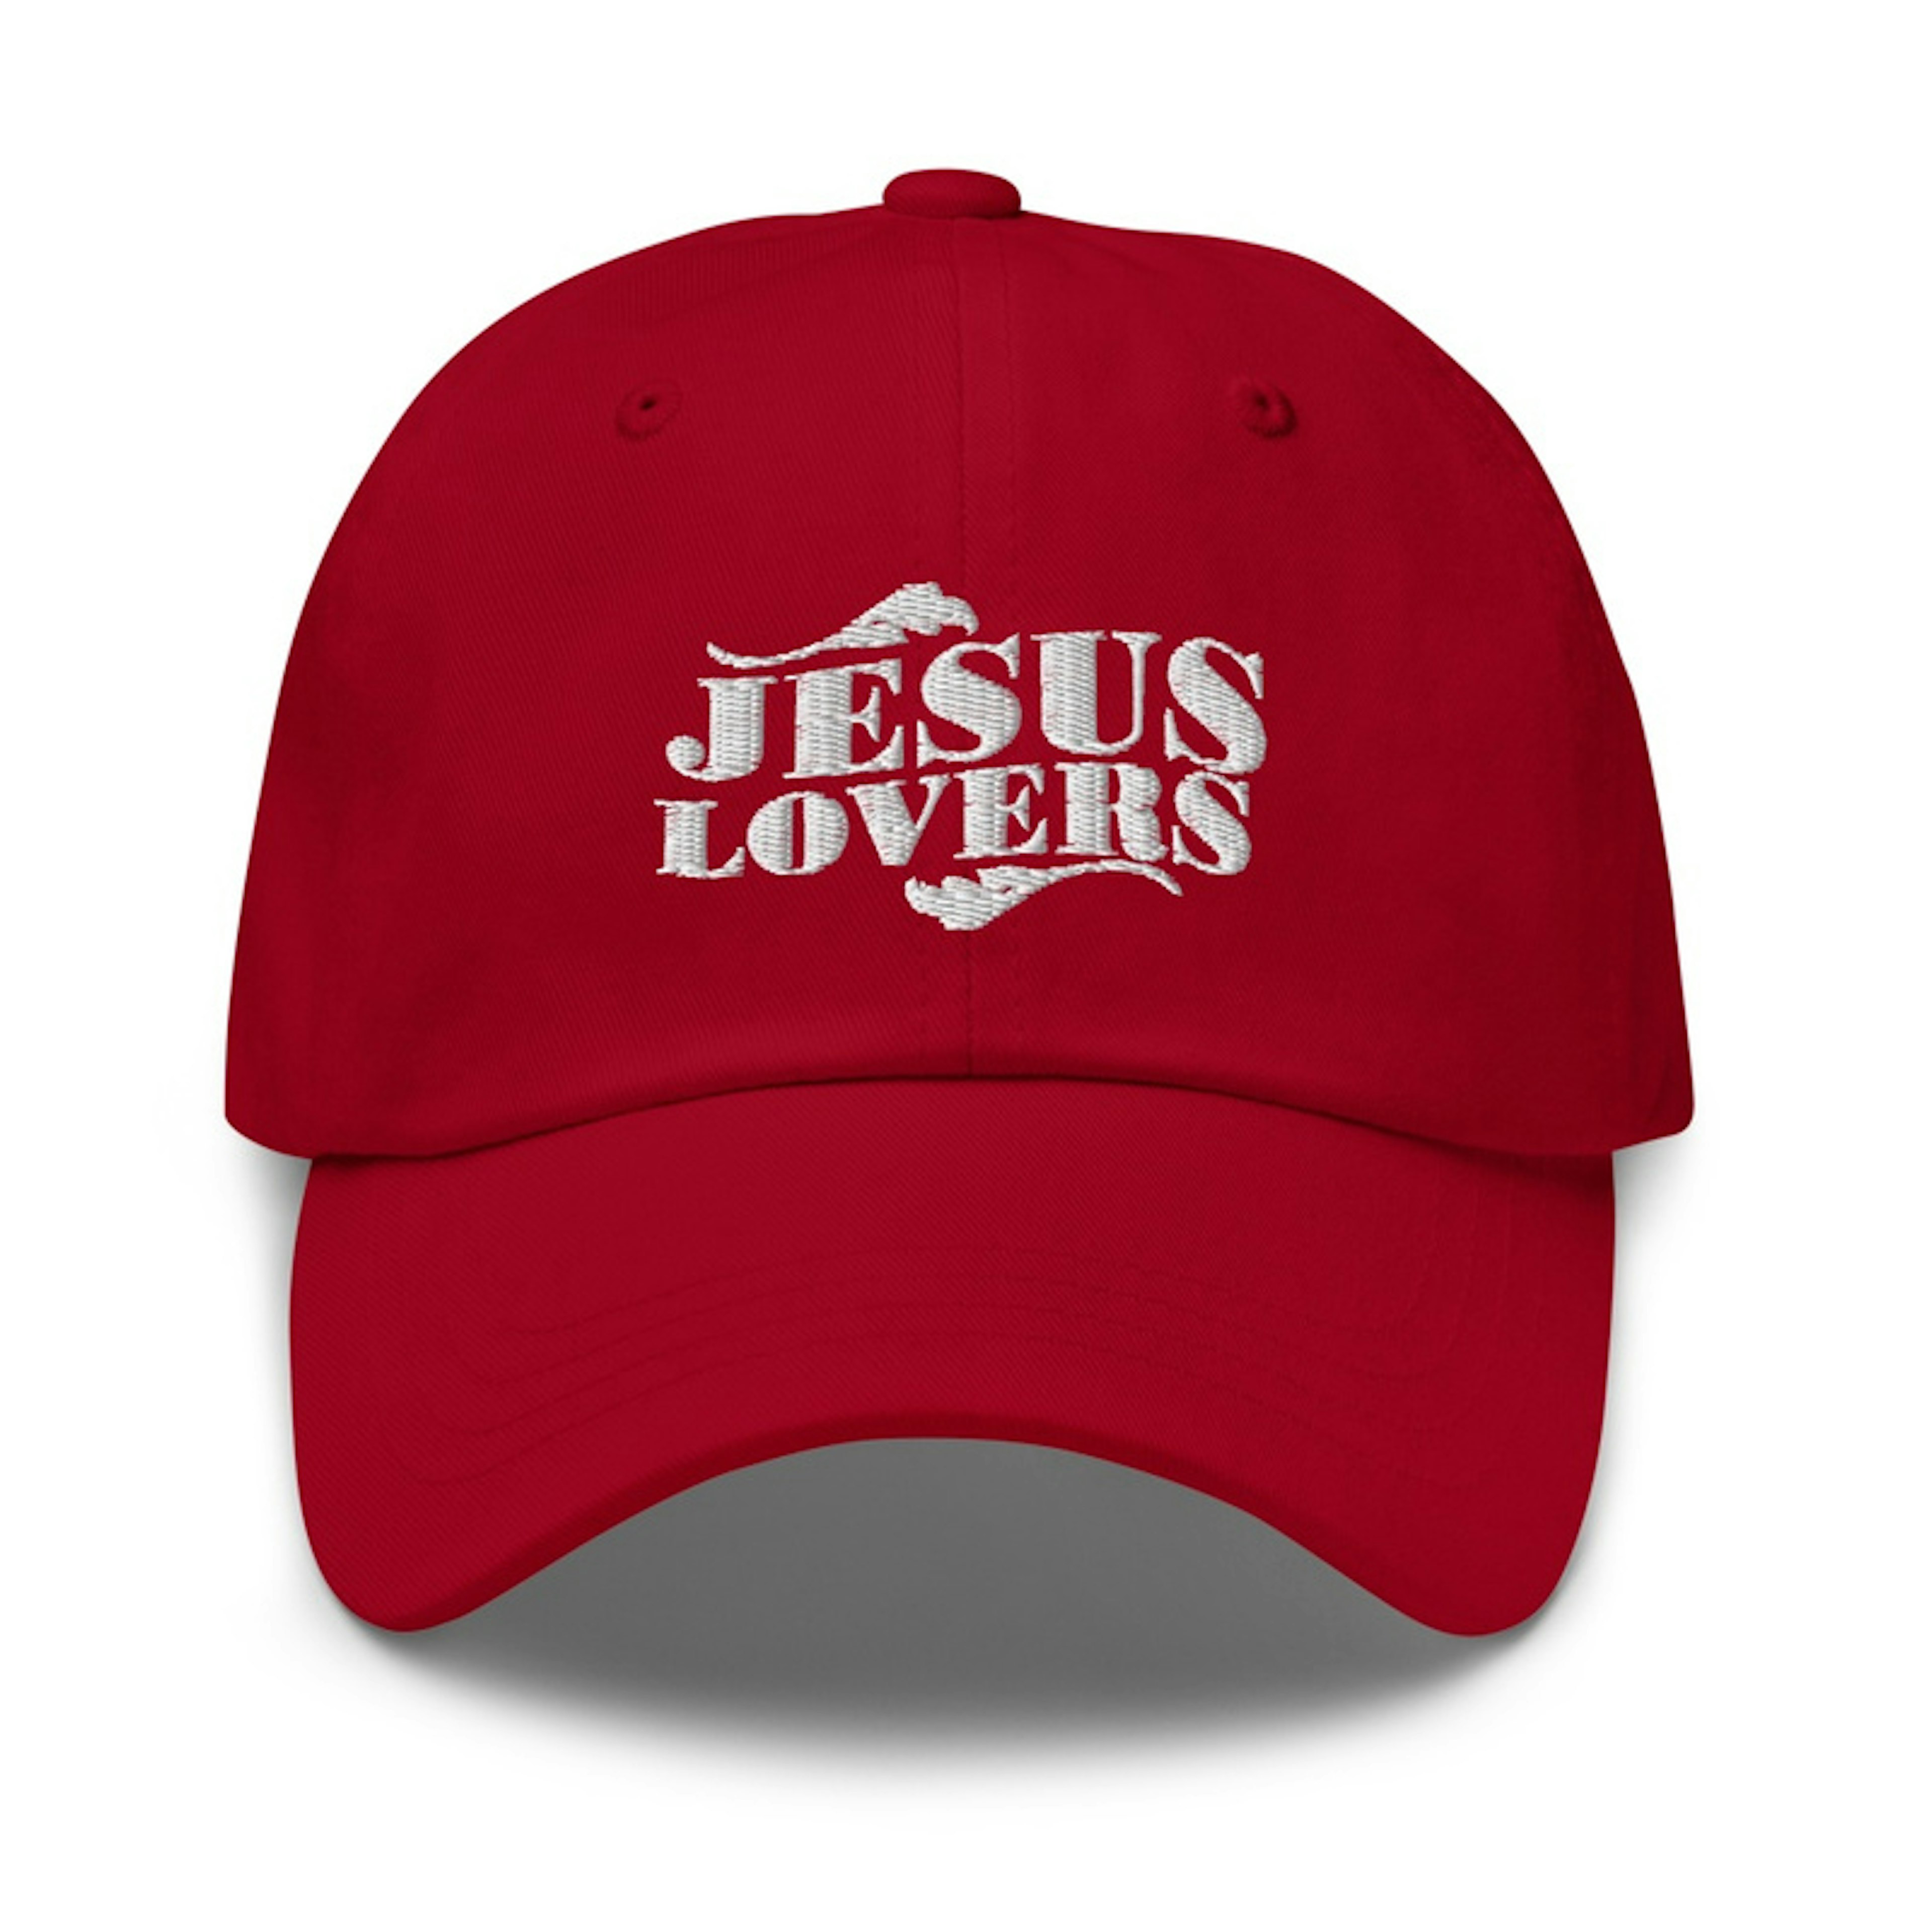 JESUS LOVERS